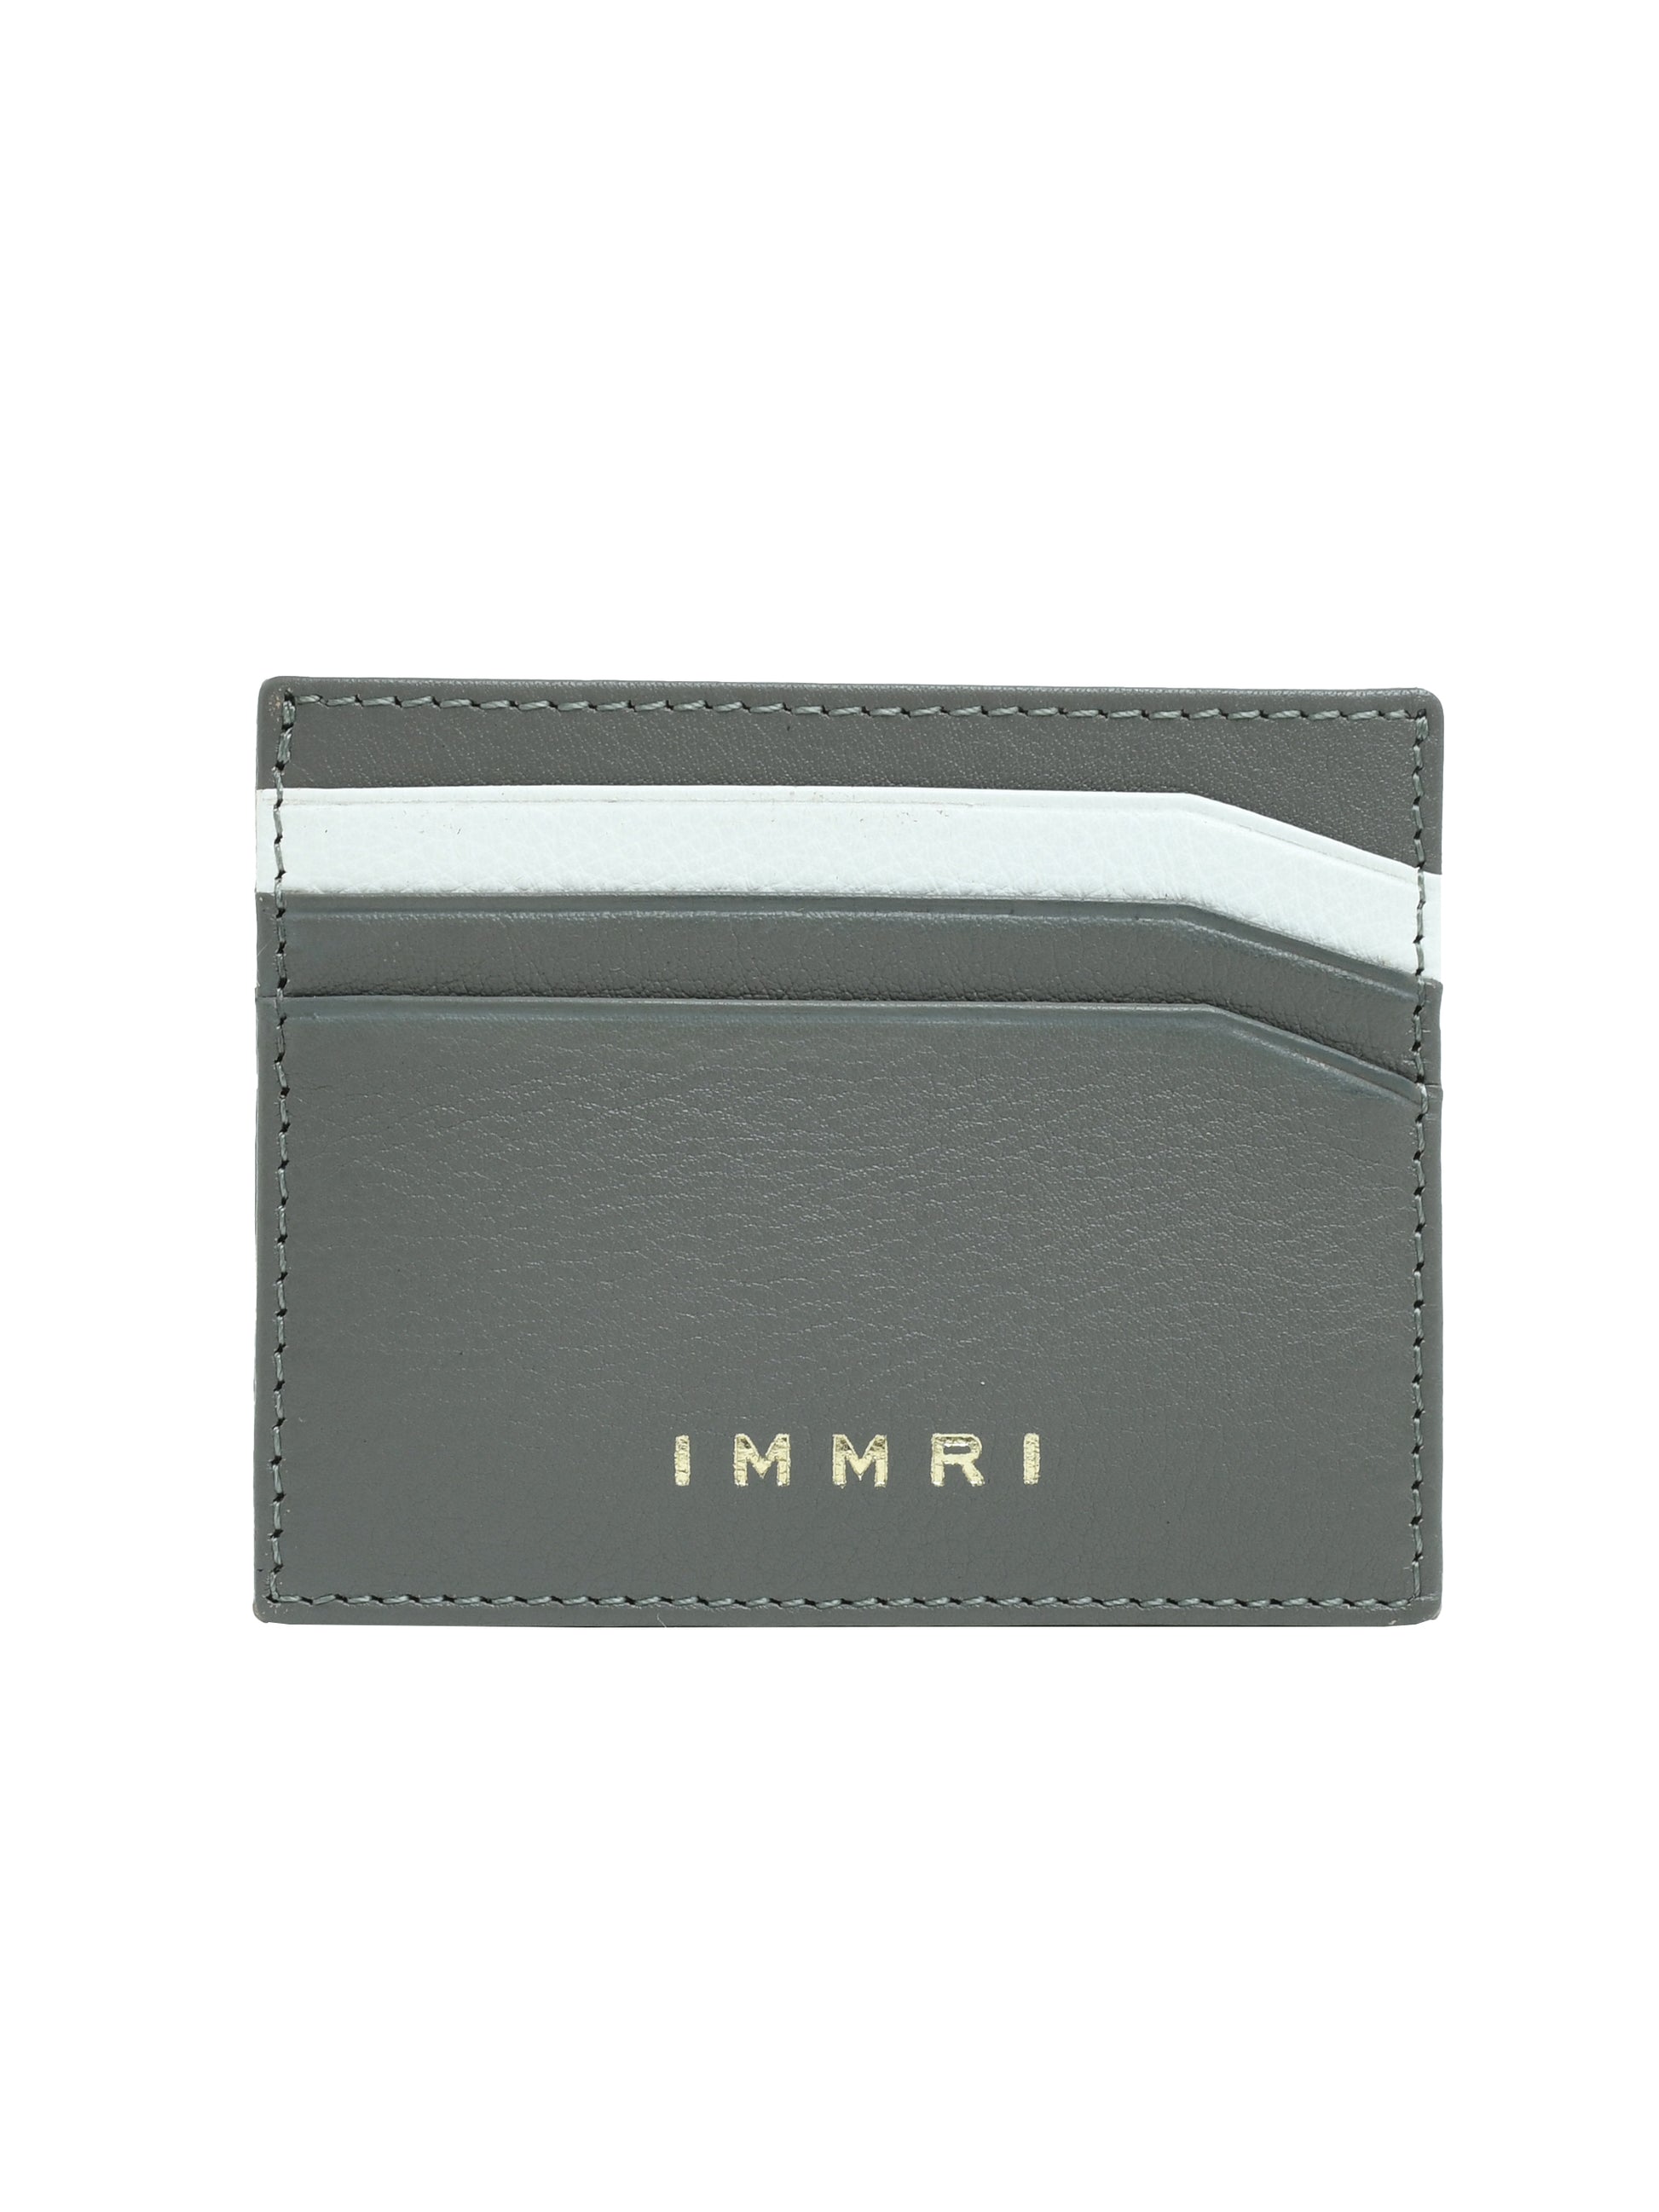 IMMRI I Leather Bags, Belts and Accessories (@studioimmri